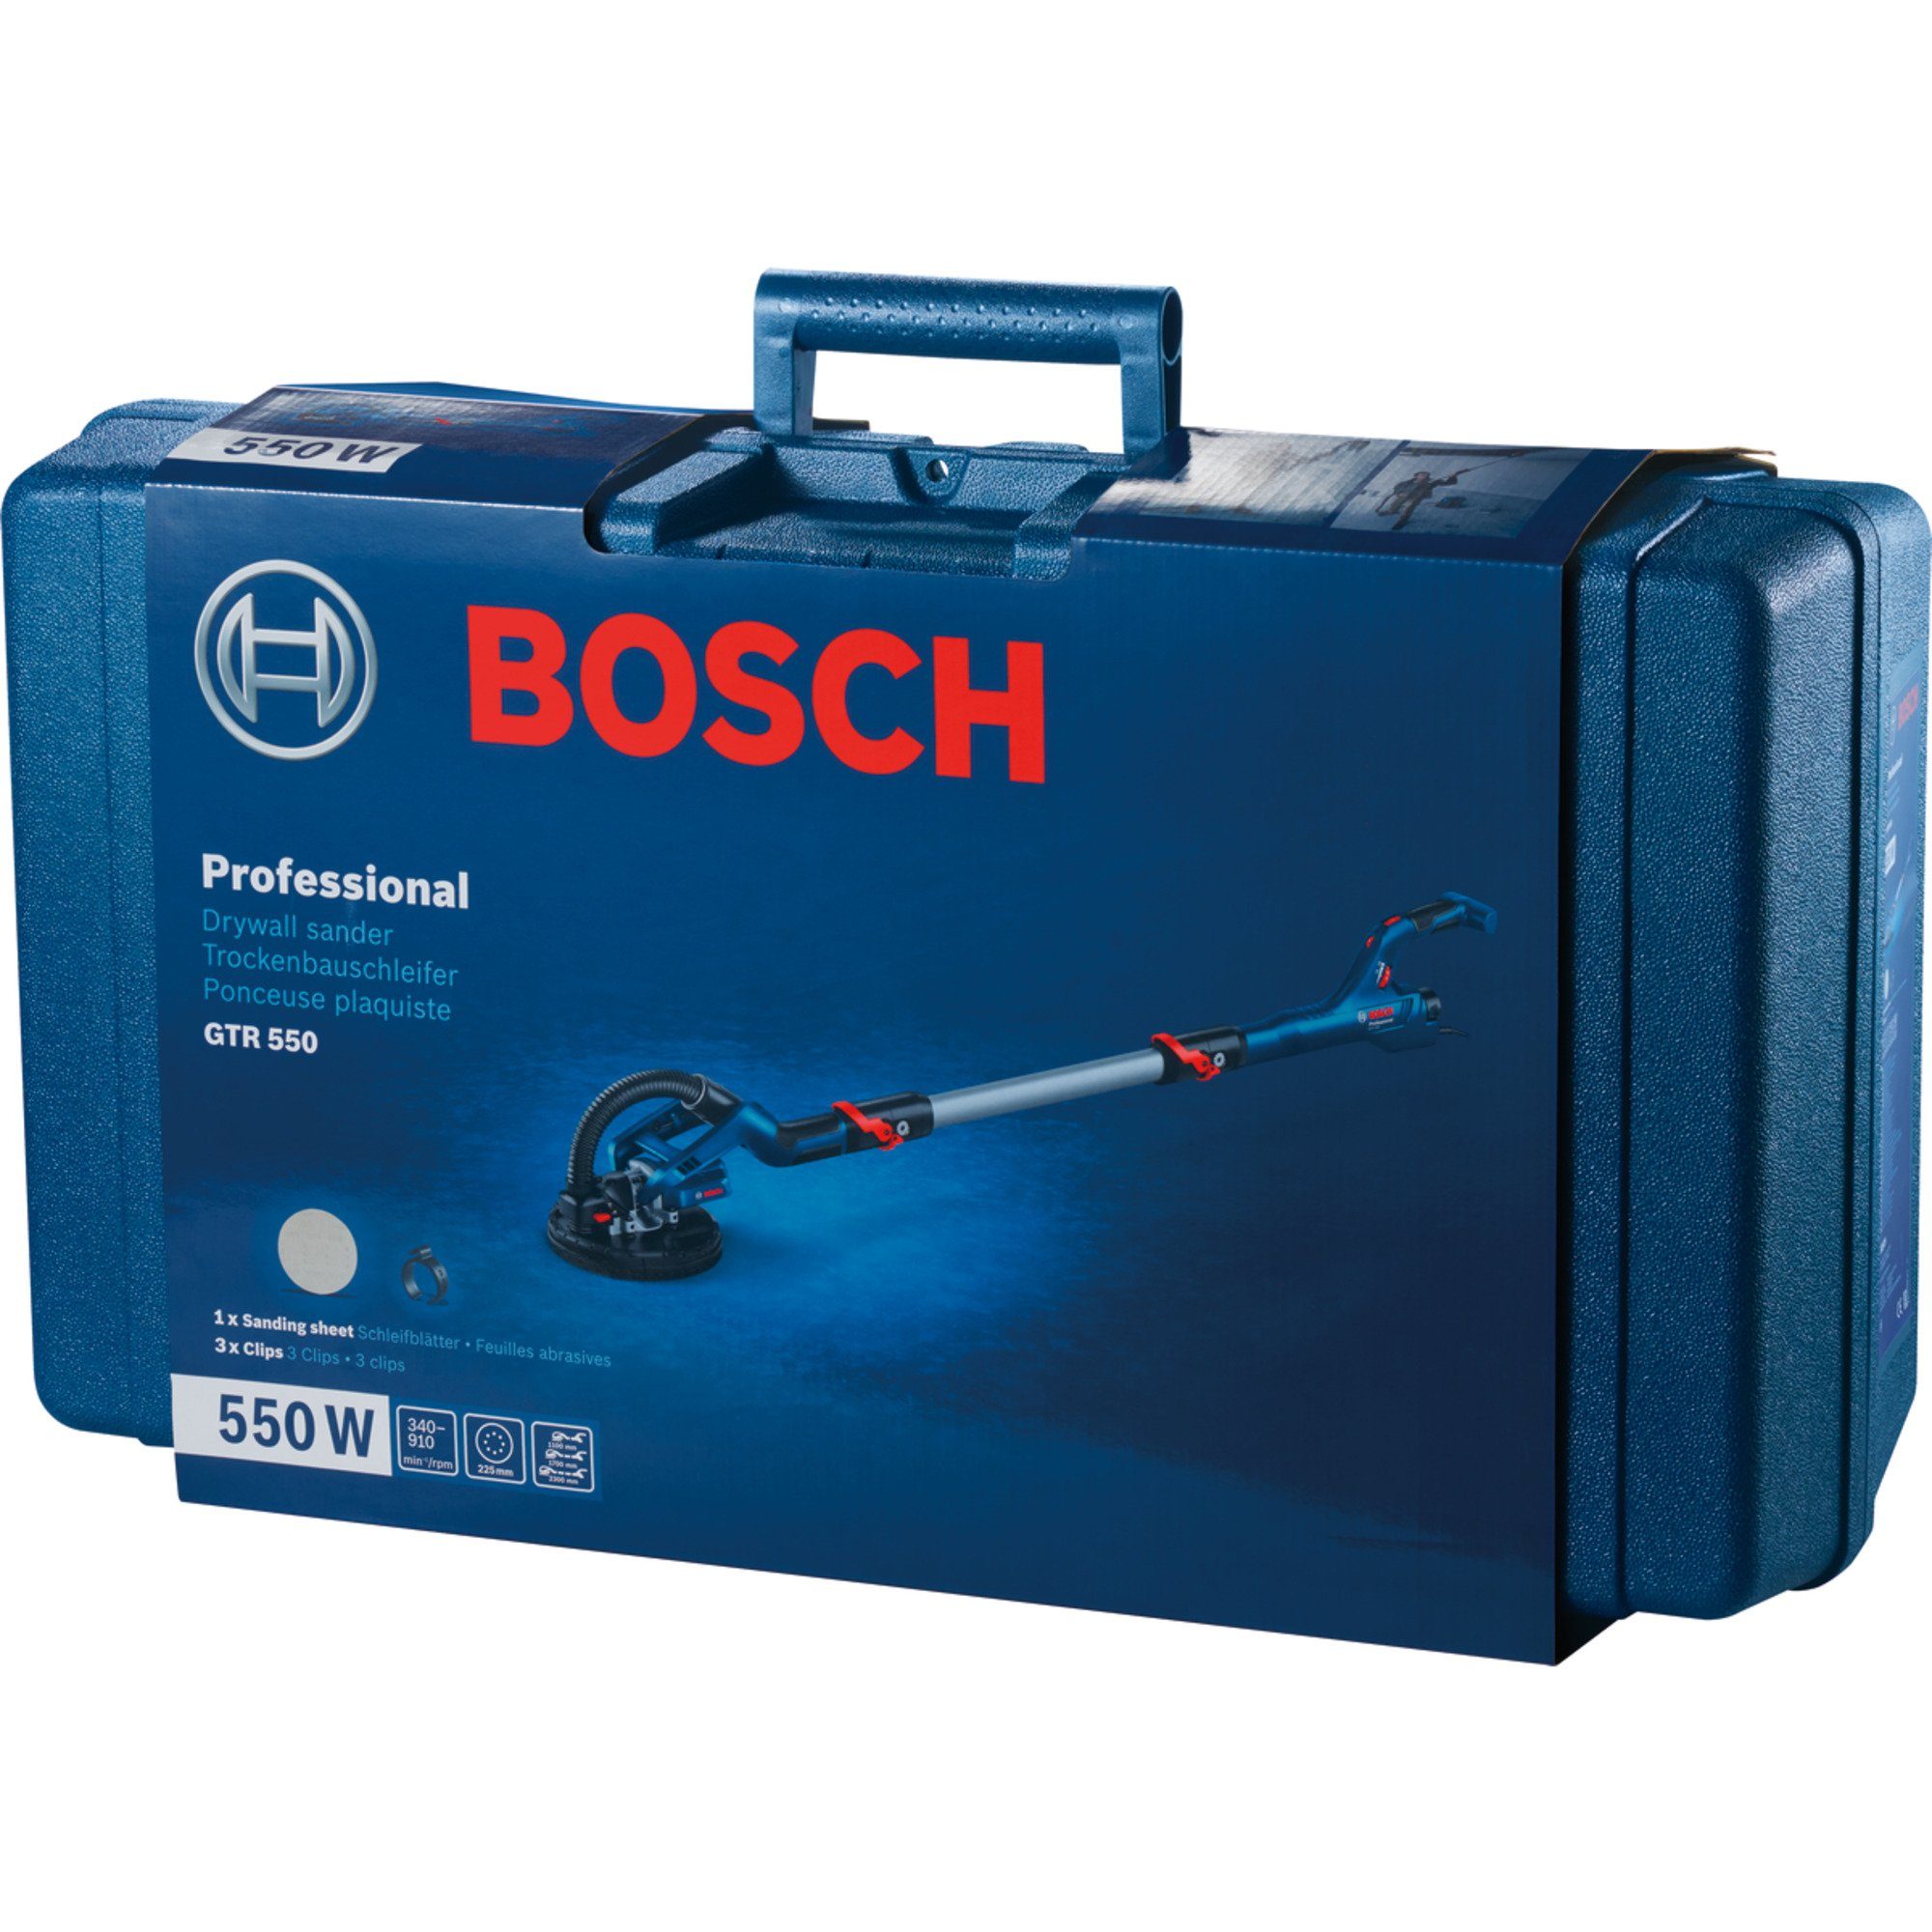 BOSCH Trockenbauschleifer 55-225 GTR Professional Multischleifer Bosch